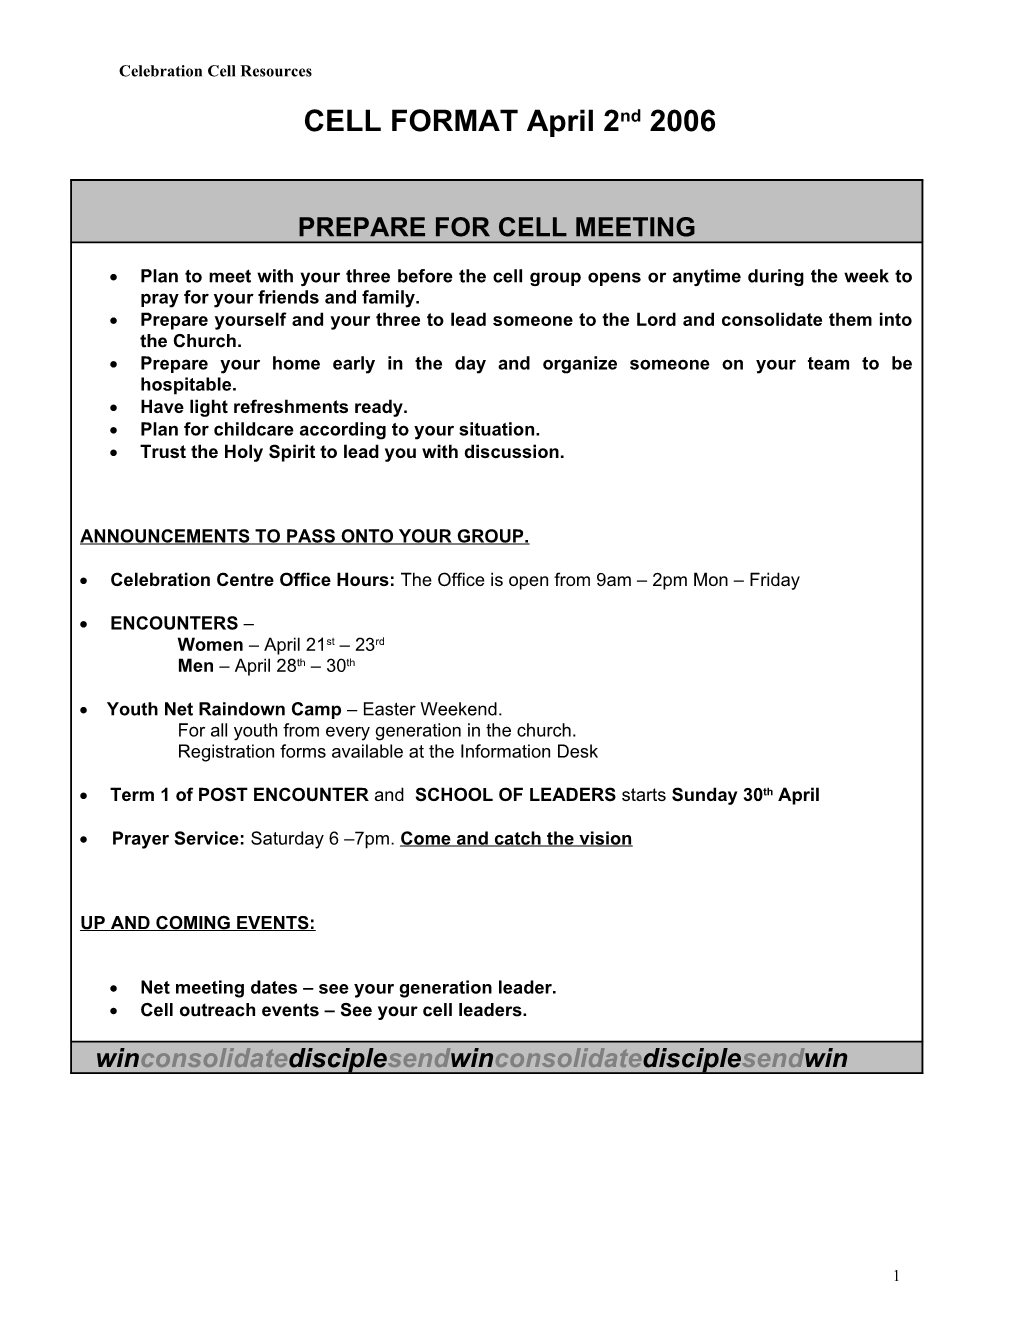 CELL PROGRAM for 1St WEEK of JANUARY 2001